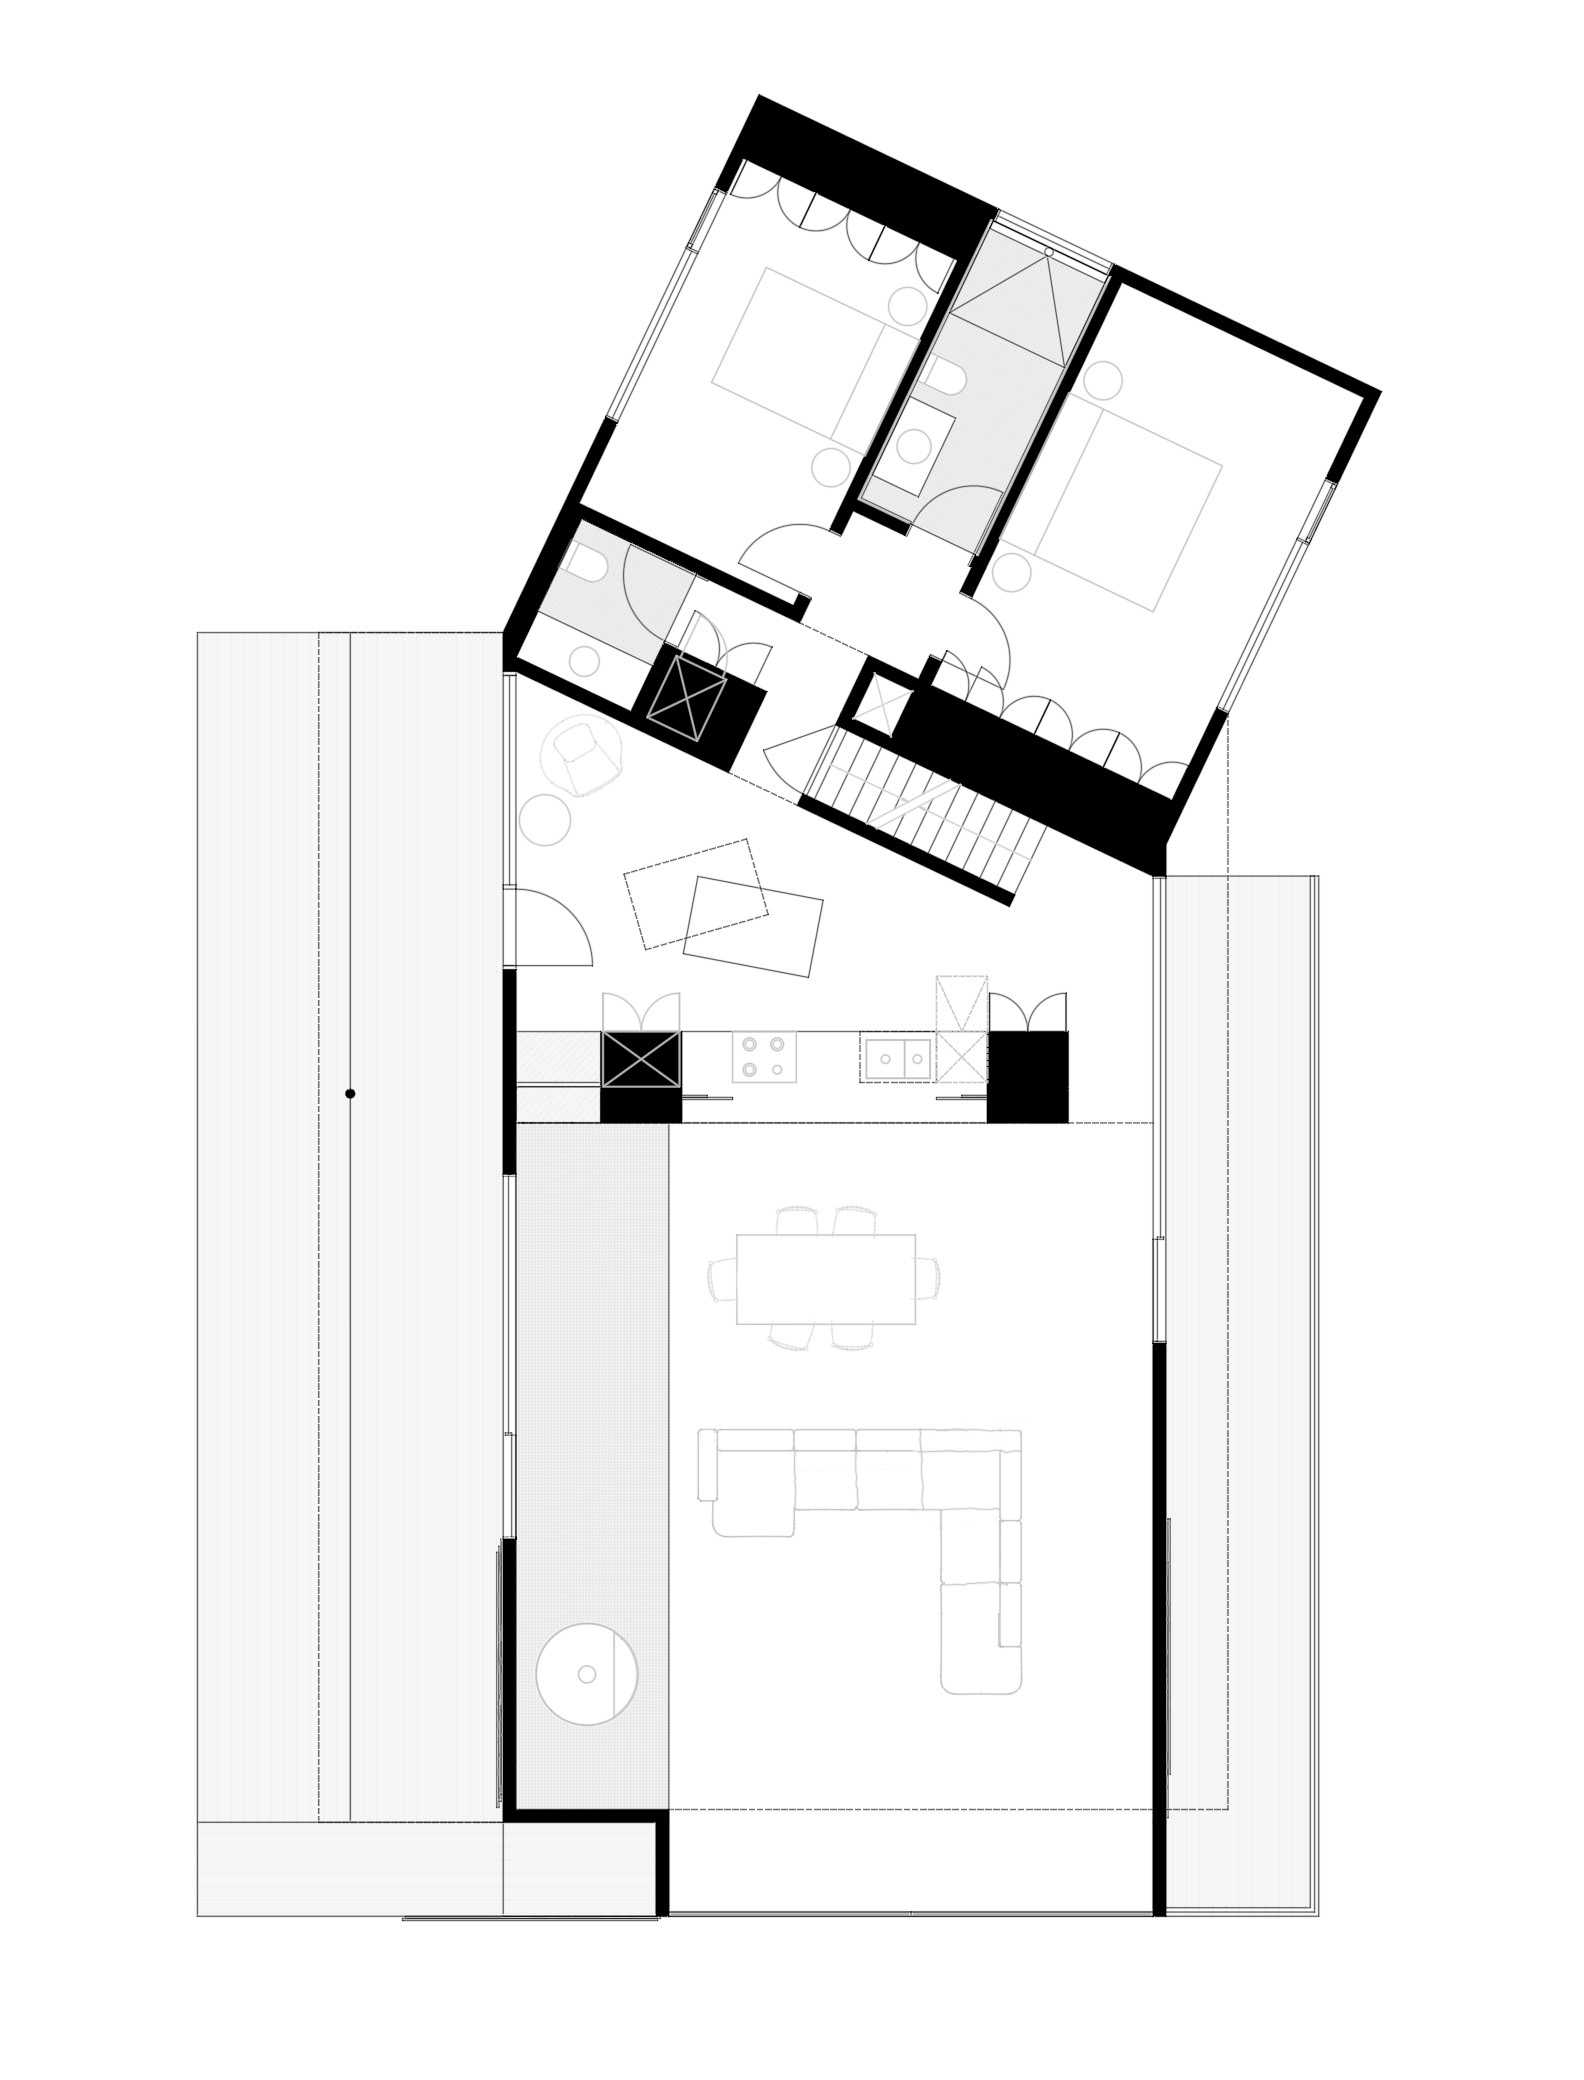 Plan of Light House